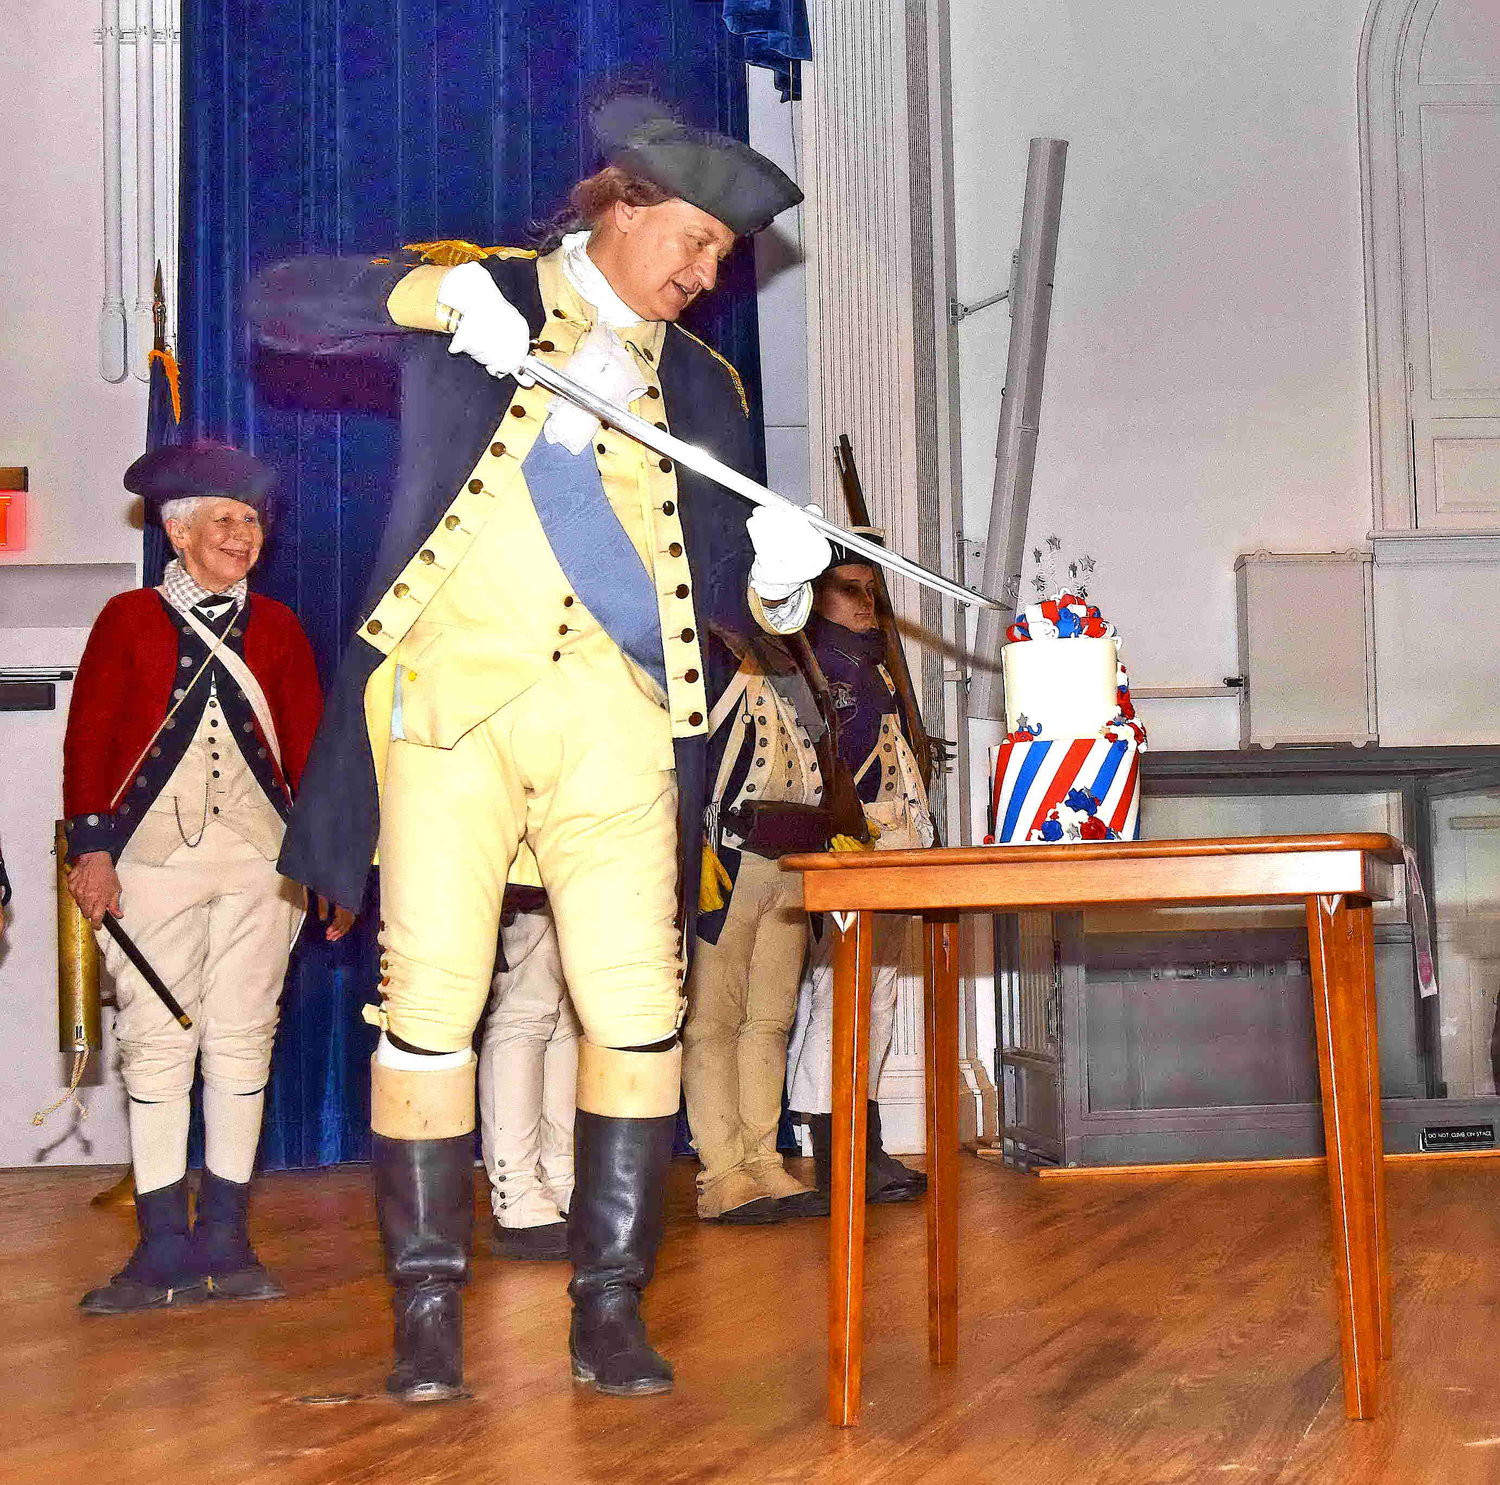 Gen. George Washington, portrayed by John Godzieba, used his sword to cut his birthday cake.